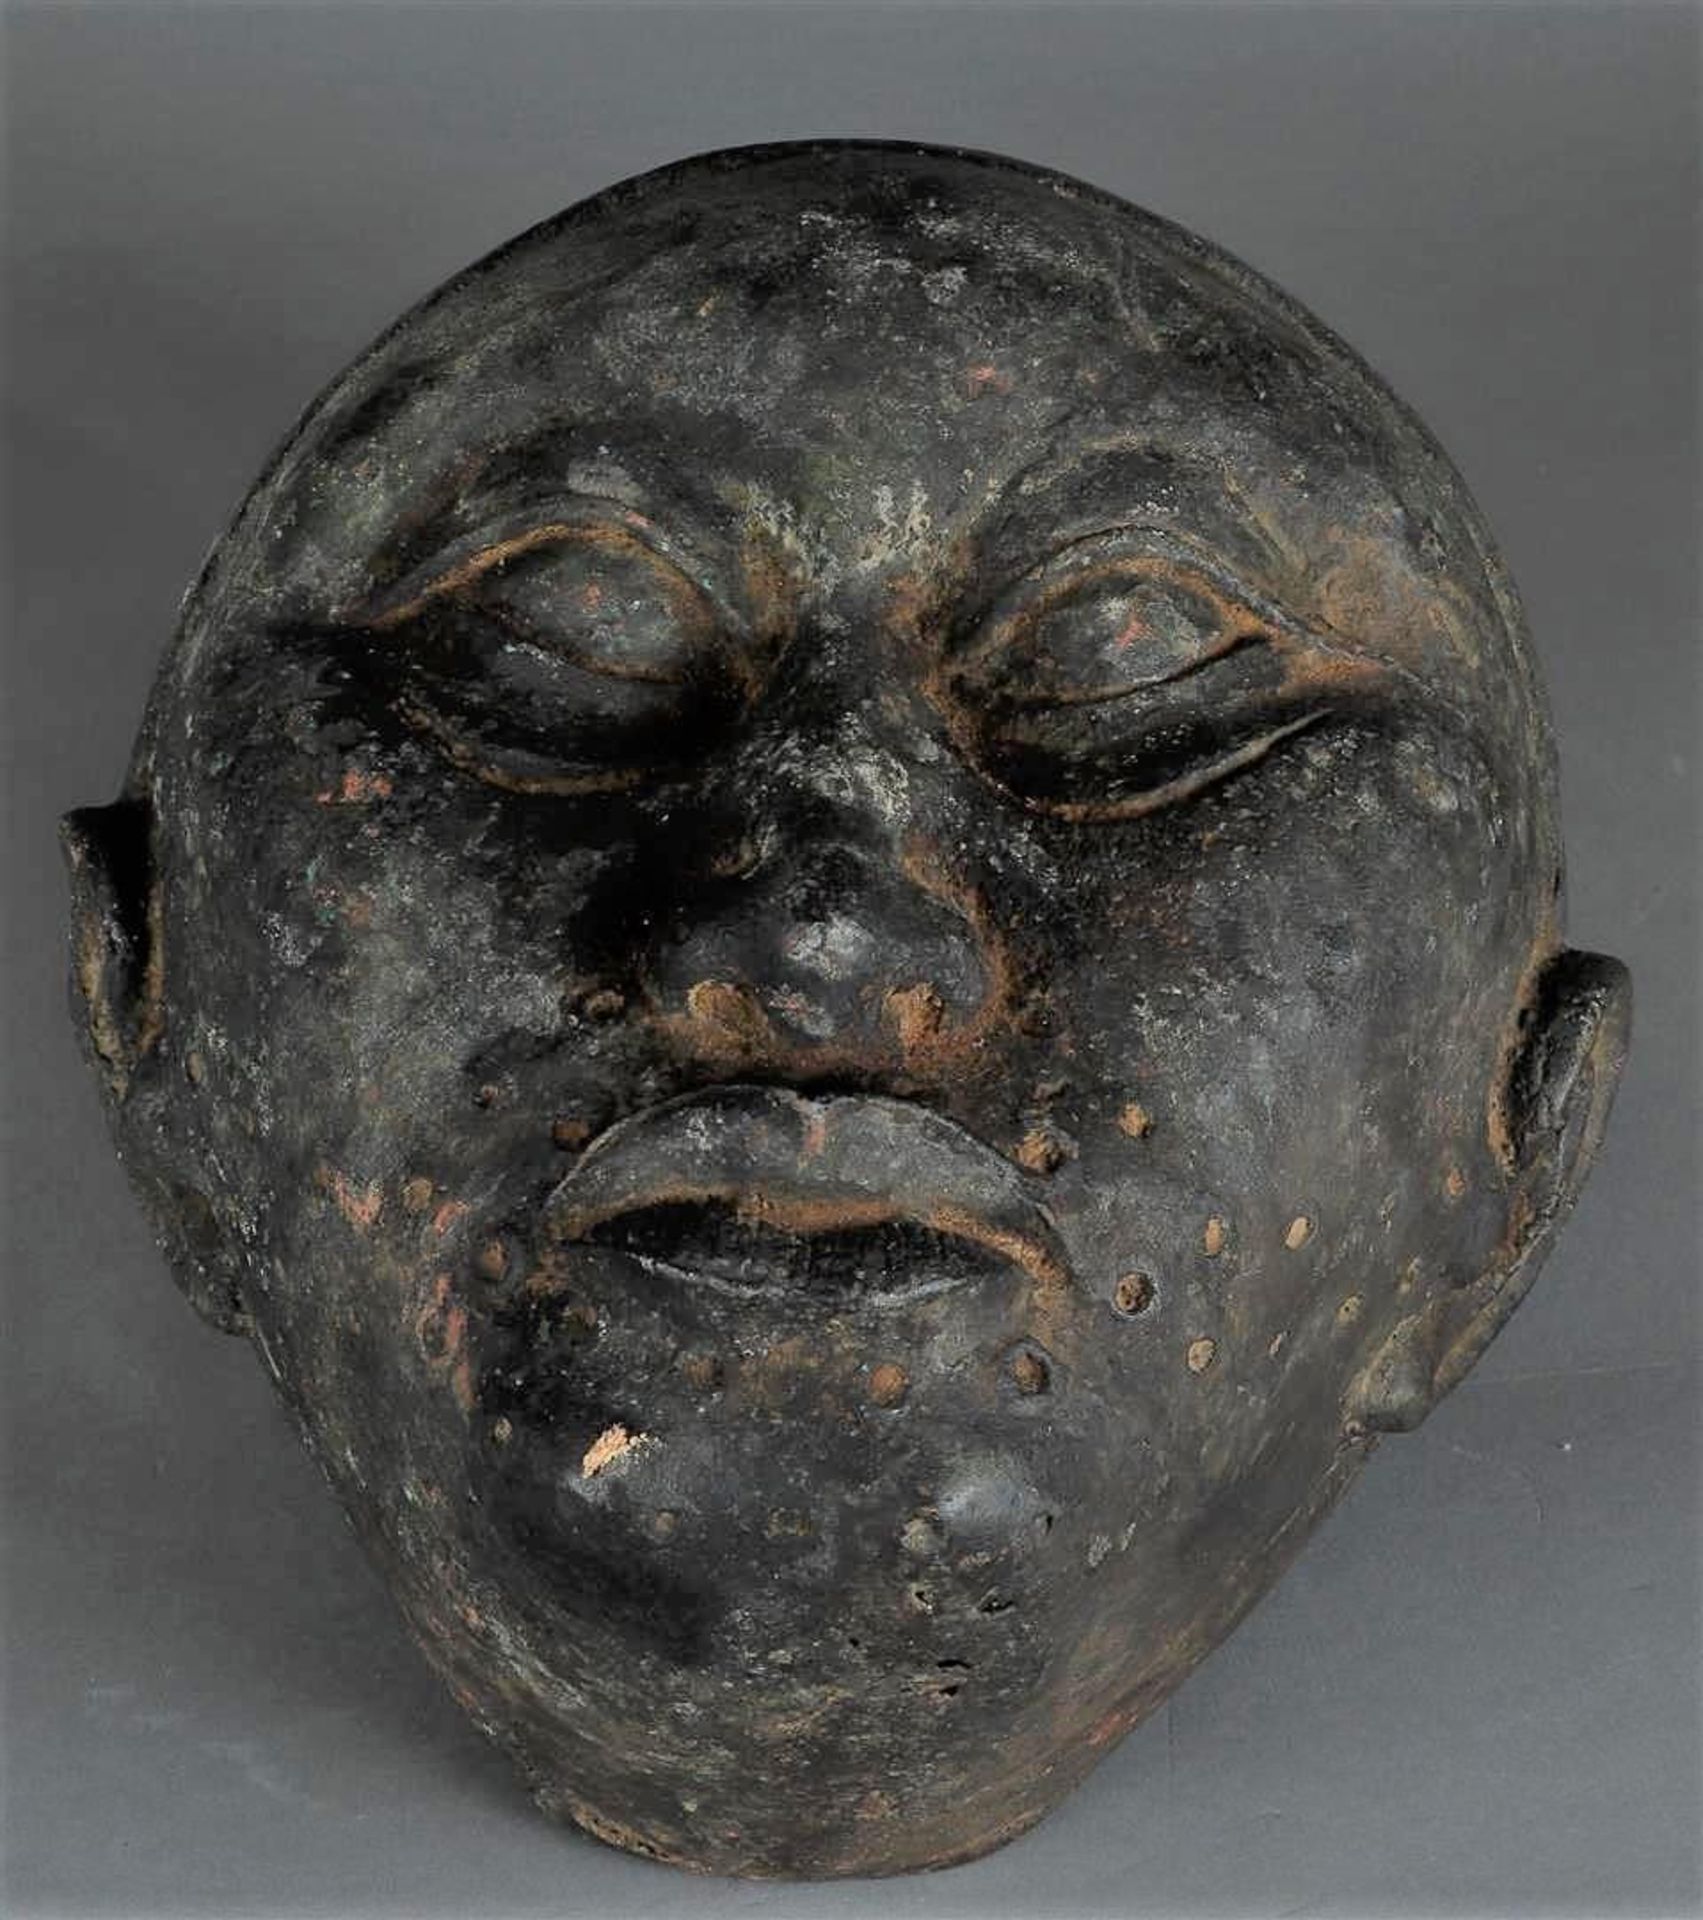 Life size Royal mask in bronze - IFE - Nigeria, Benin City region, Africa.